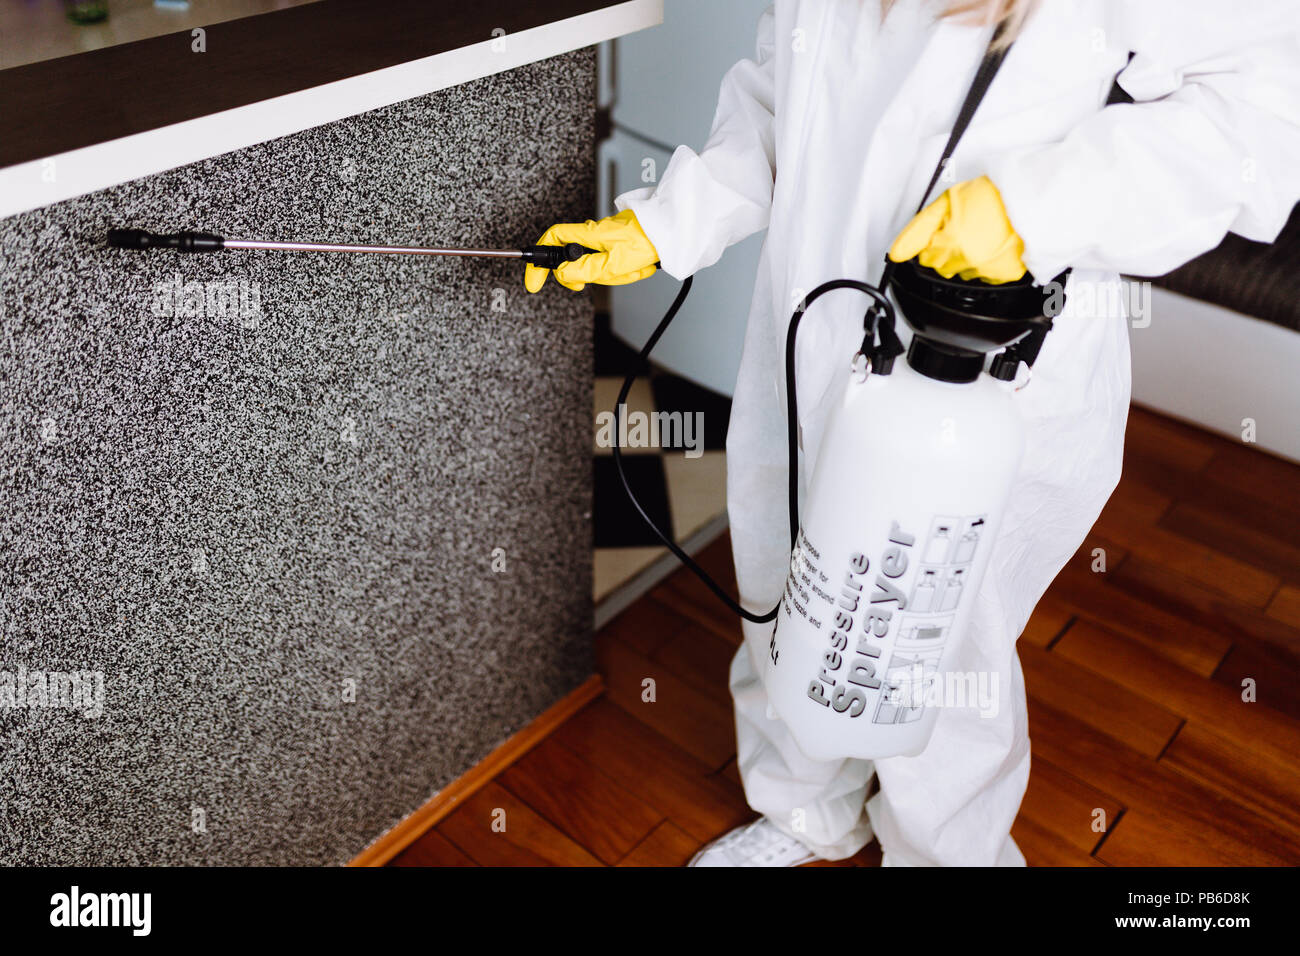 Exterminator in work wear spraying pesticide with sprayer. Stock Photo